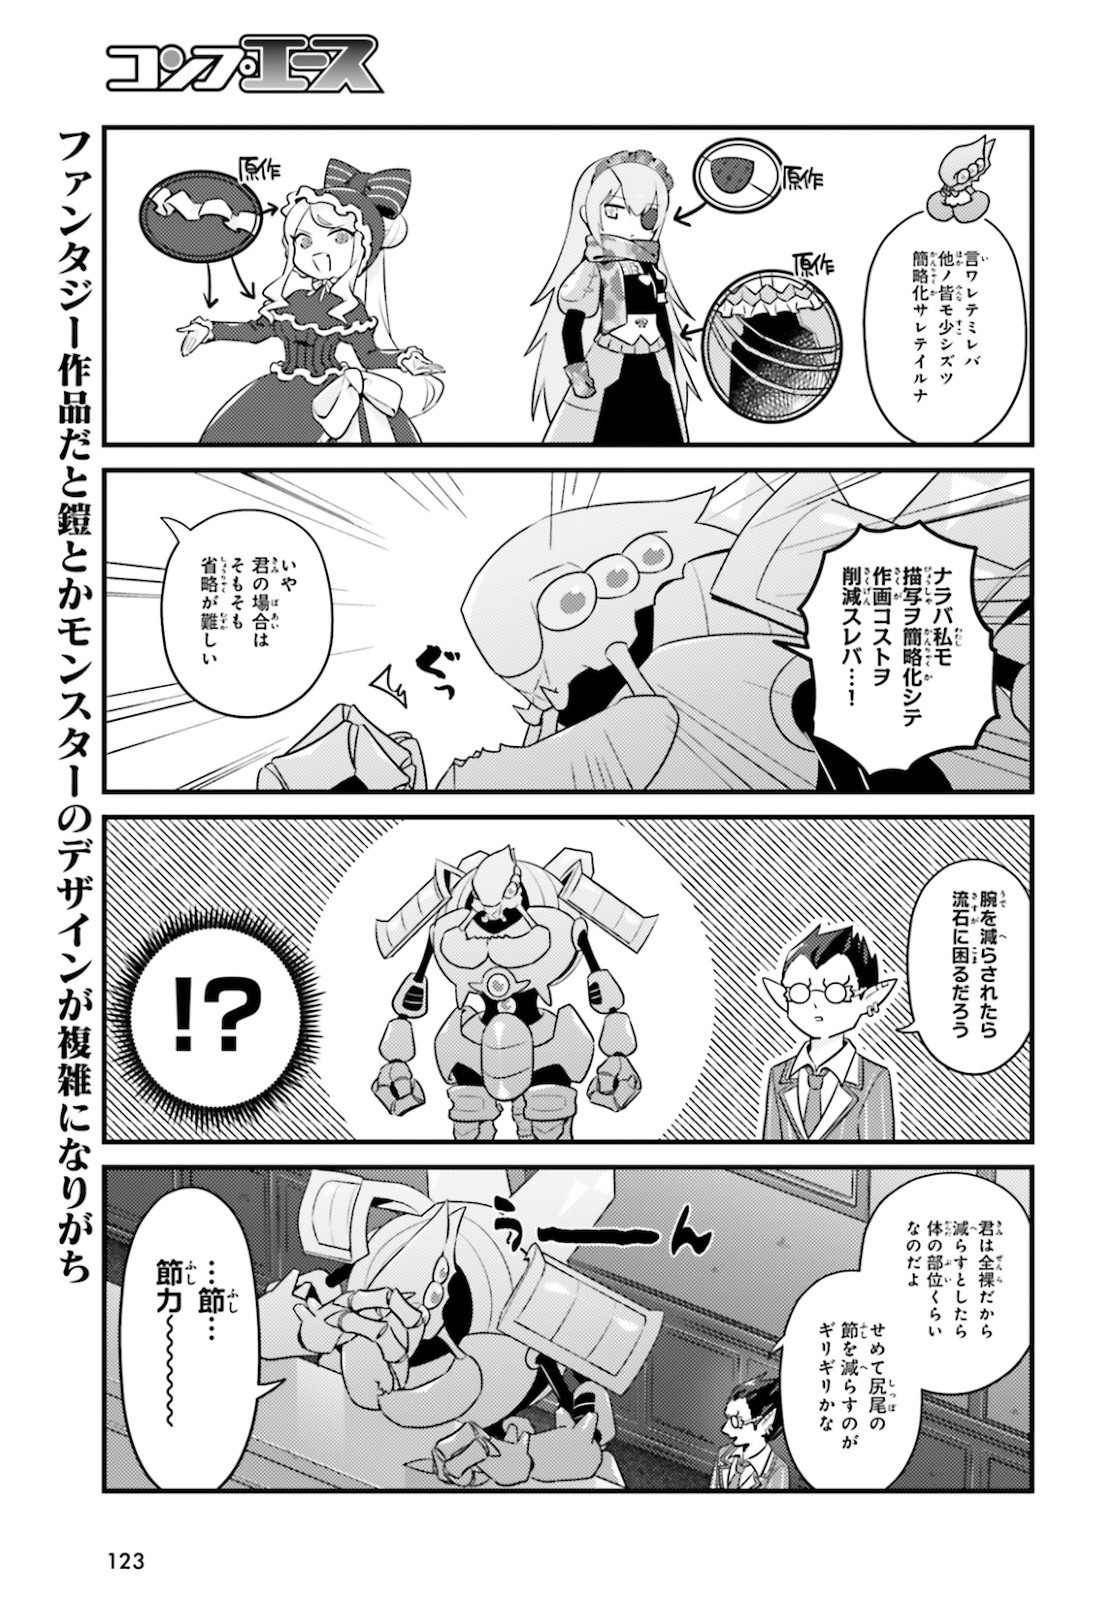 Overlord-Fushisha-no-Oh - Chapter 42 - Page 5